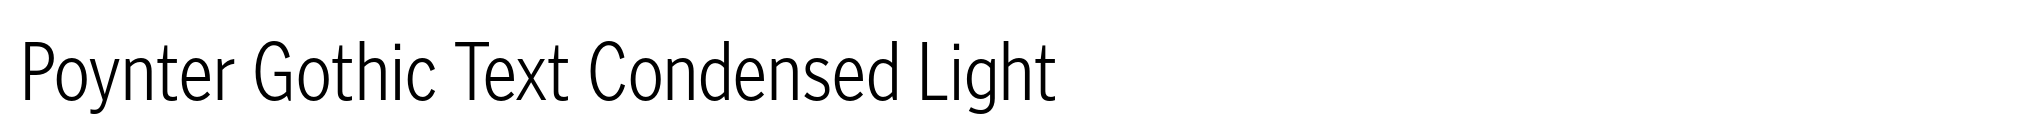 Poynter Gothic Text Condensed Light image